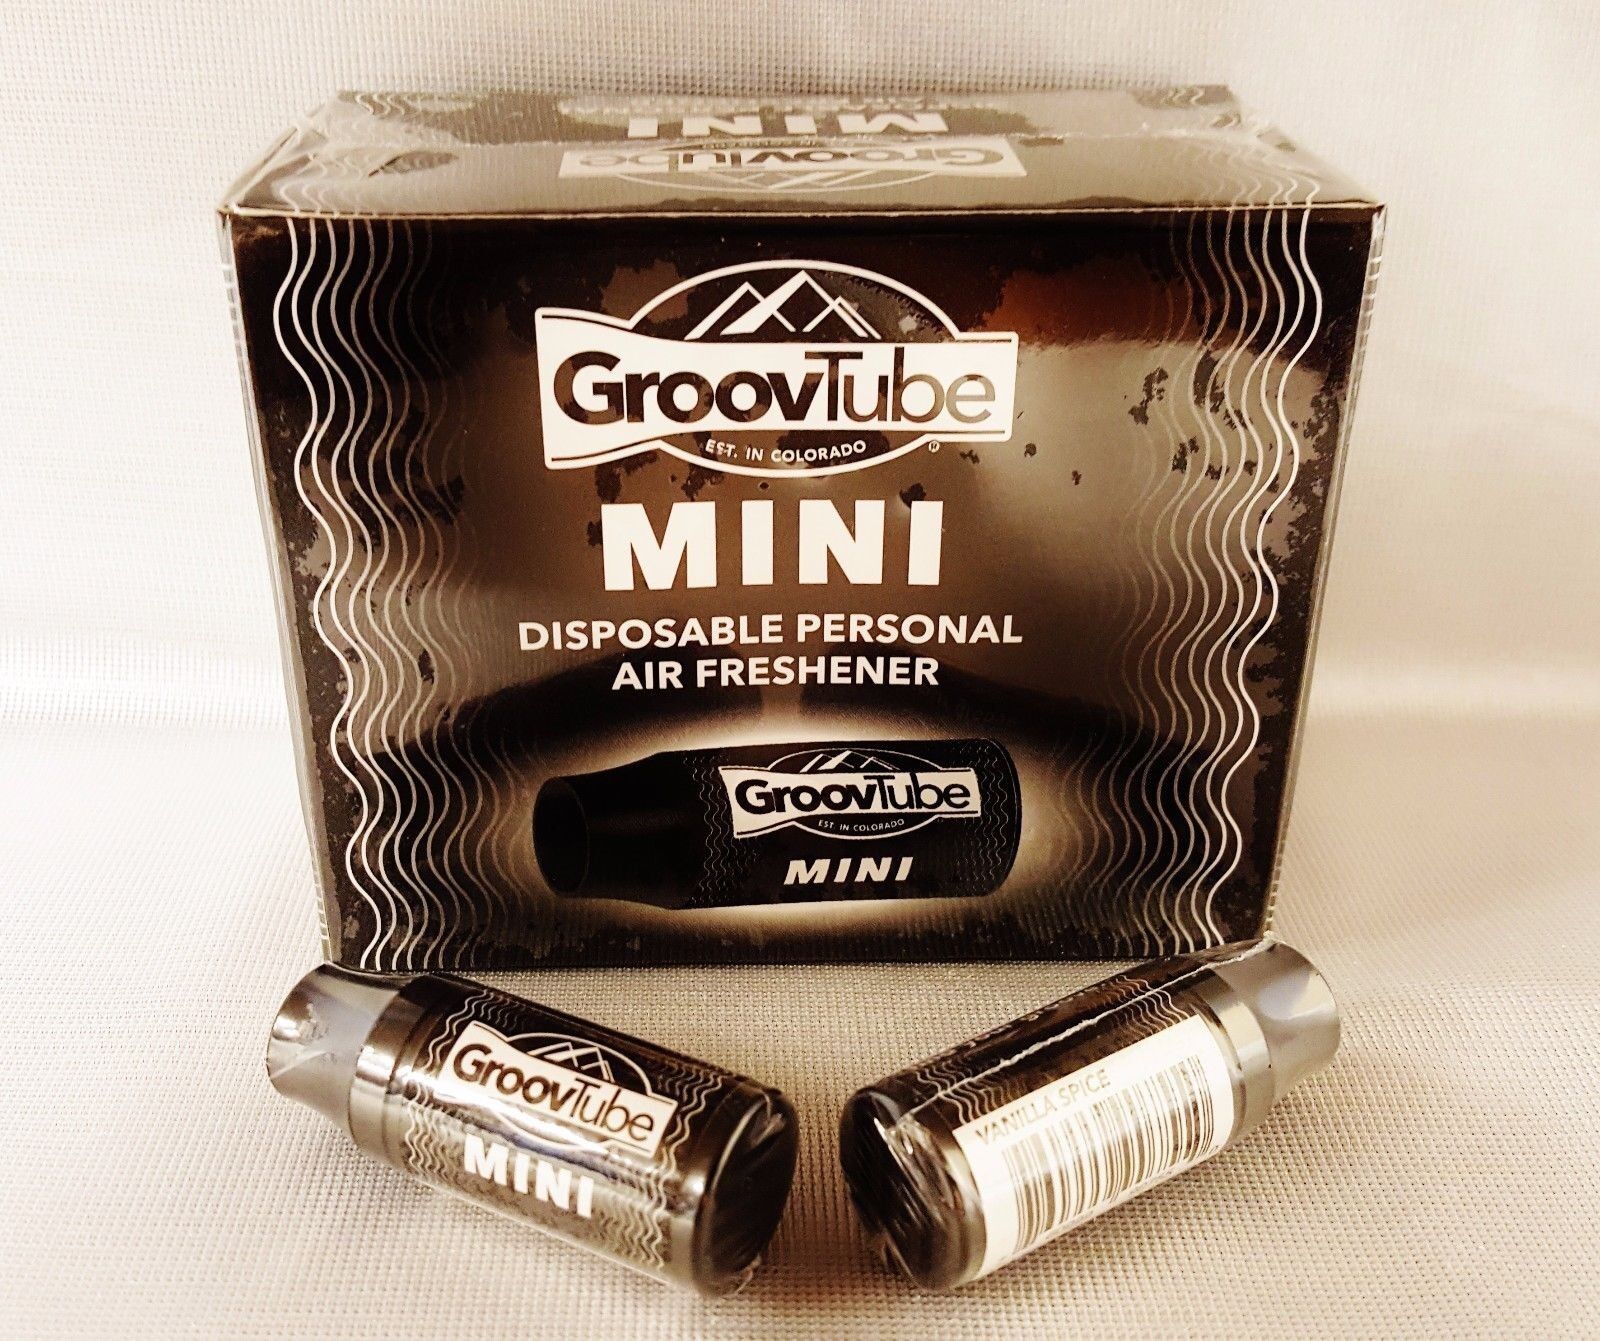 Full Box 24 GroovTube Mini Personal Disposable Air Freshener Vanilla Spice Scent